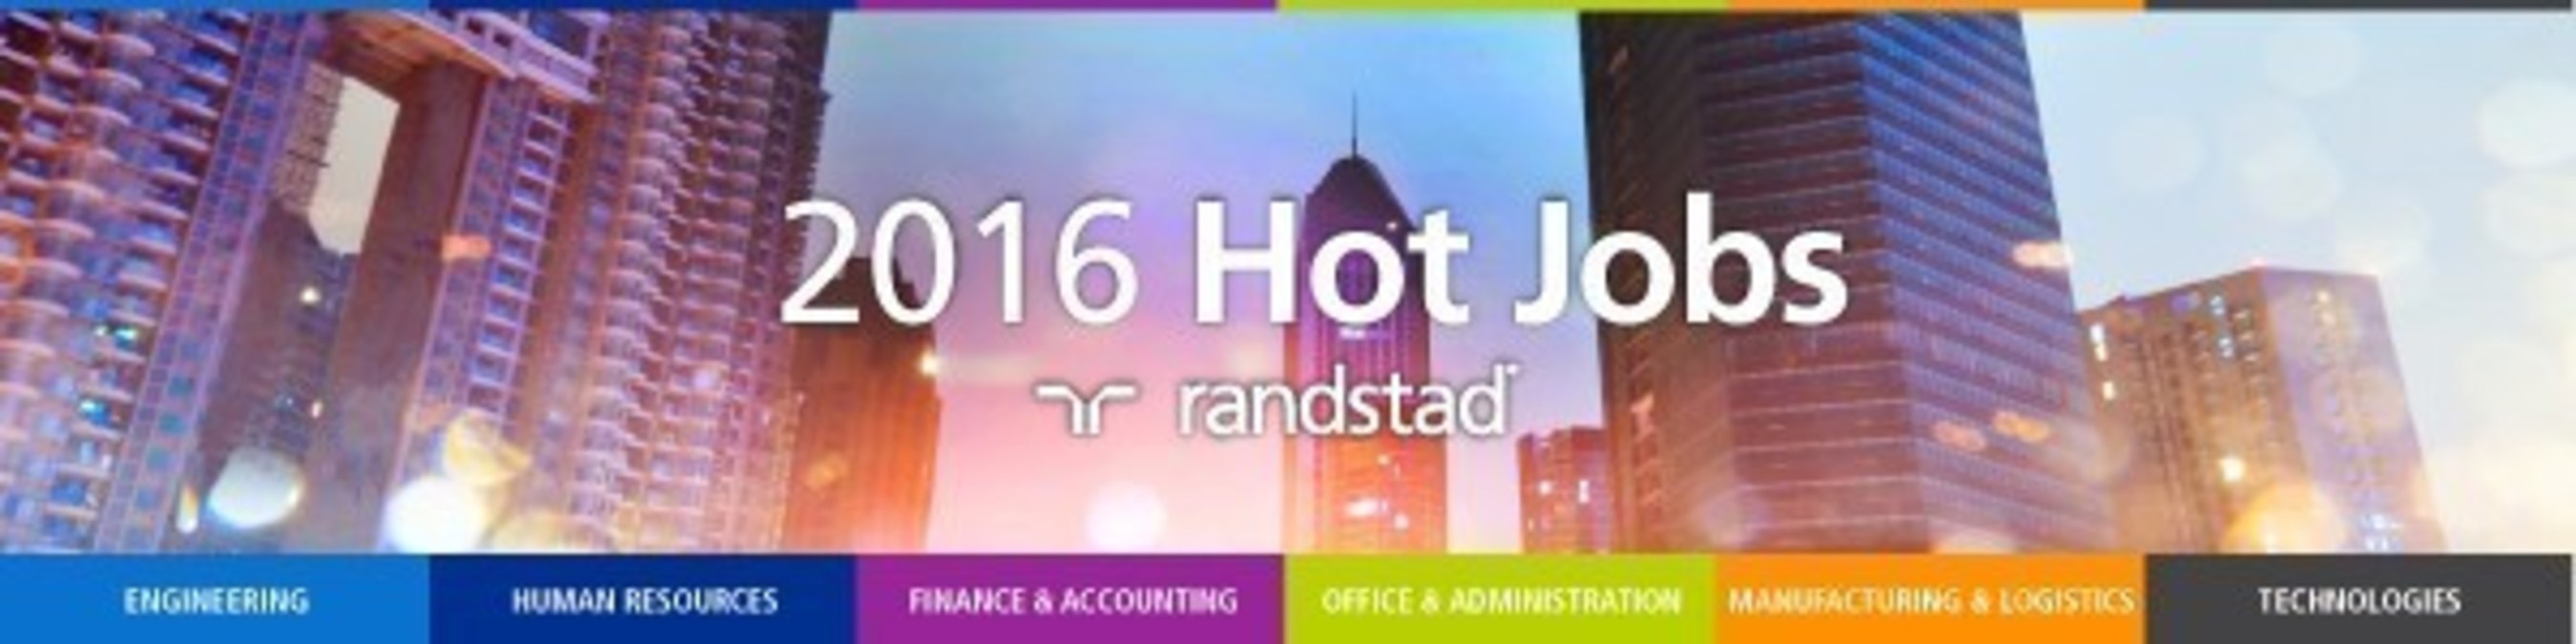 Randstad US 2016 Hot Jobs